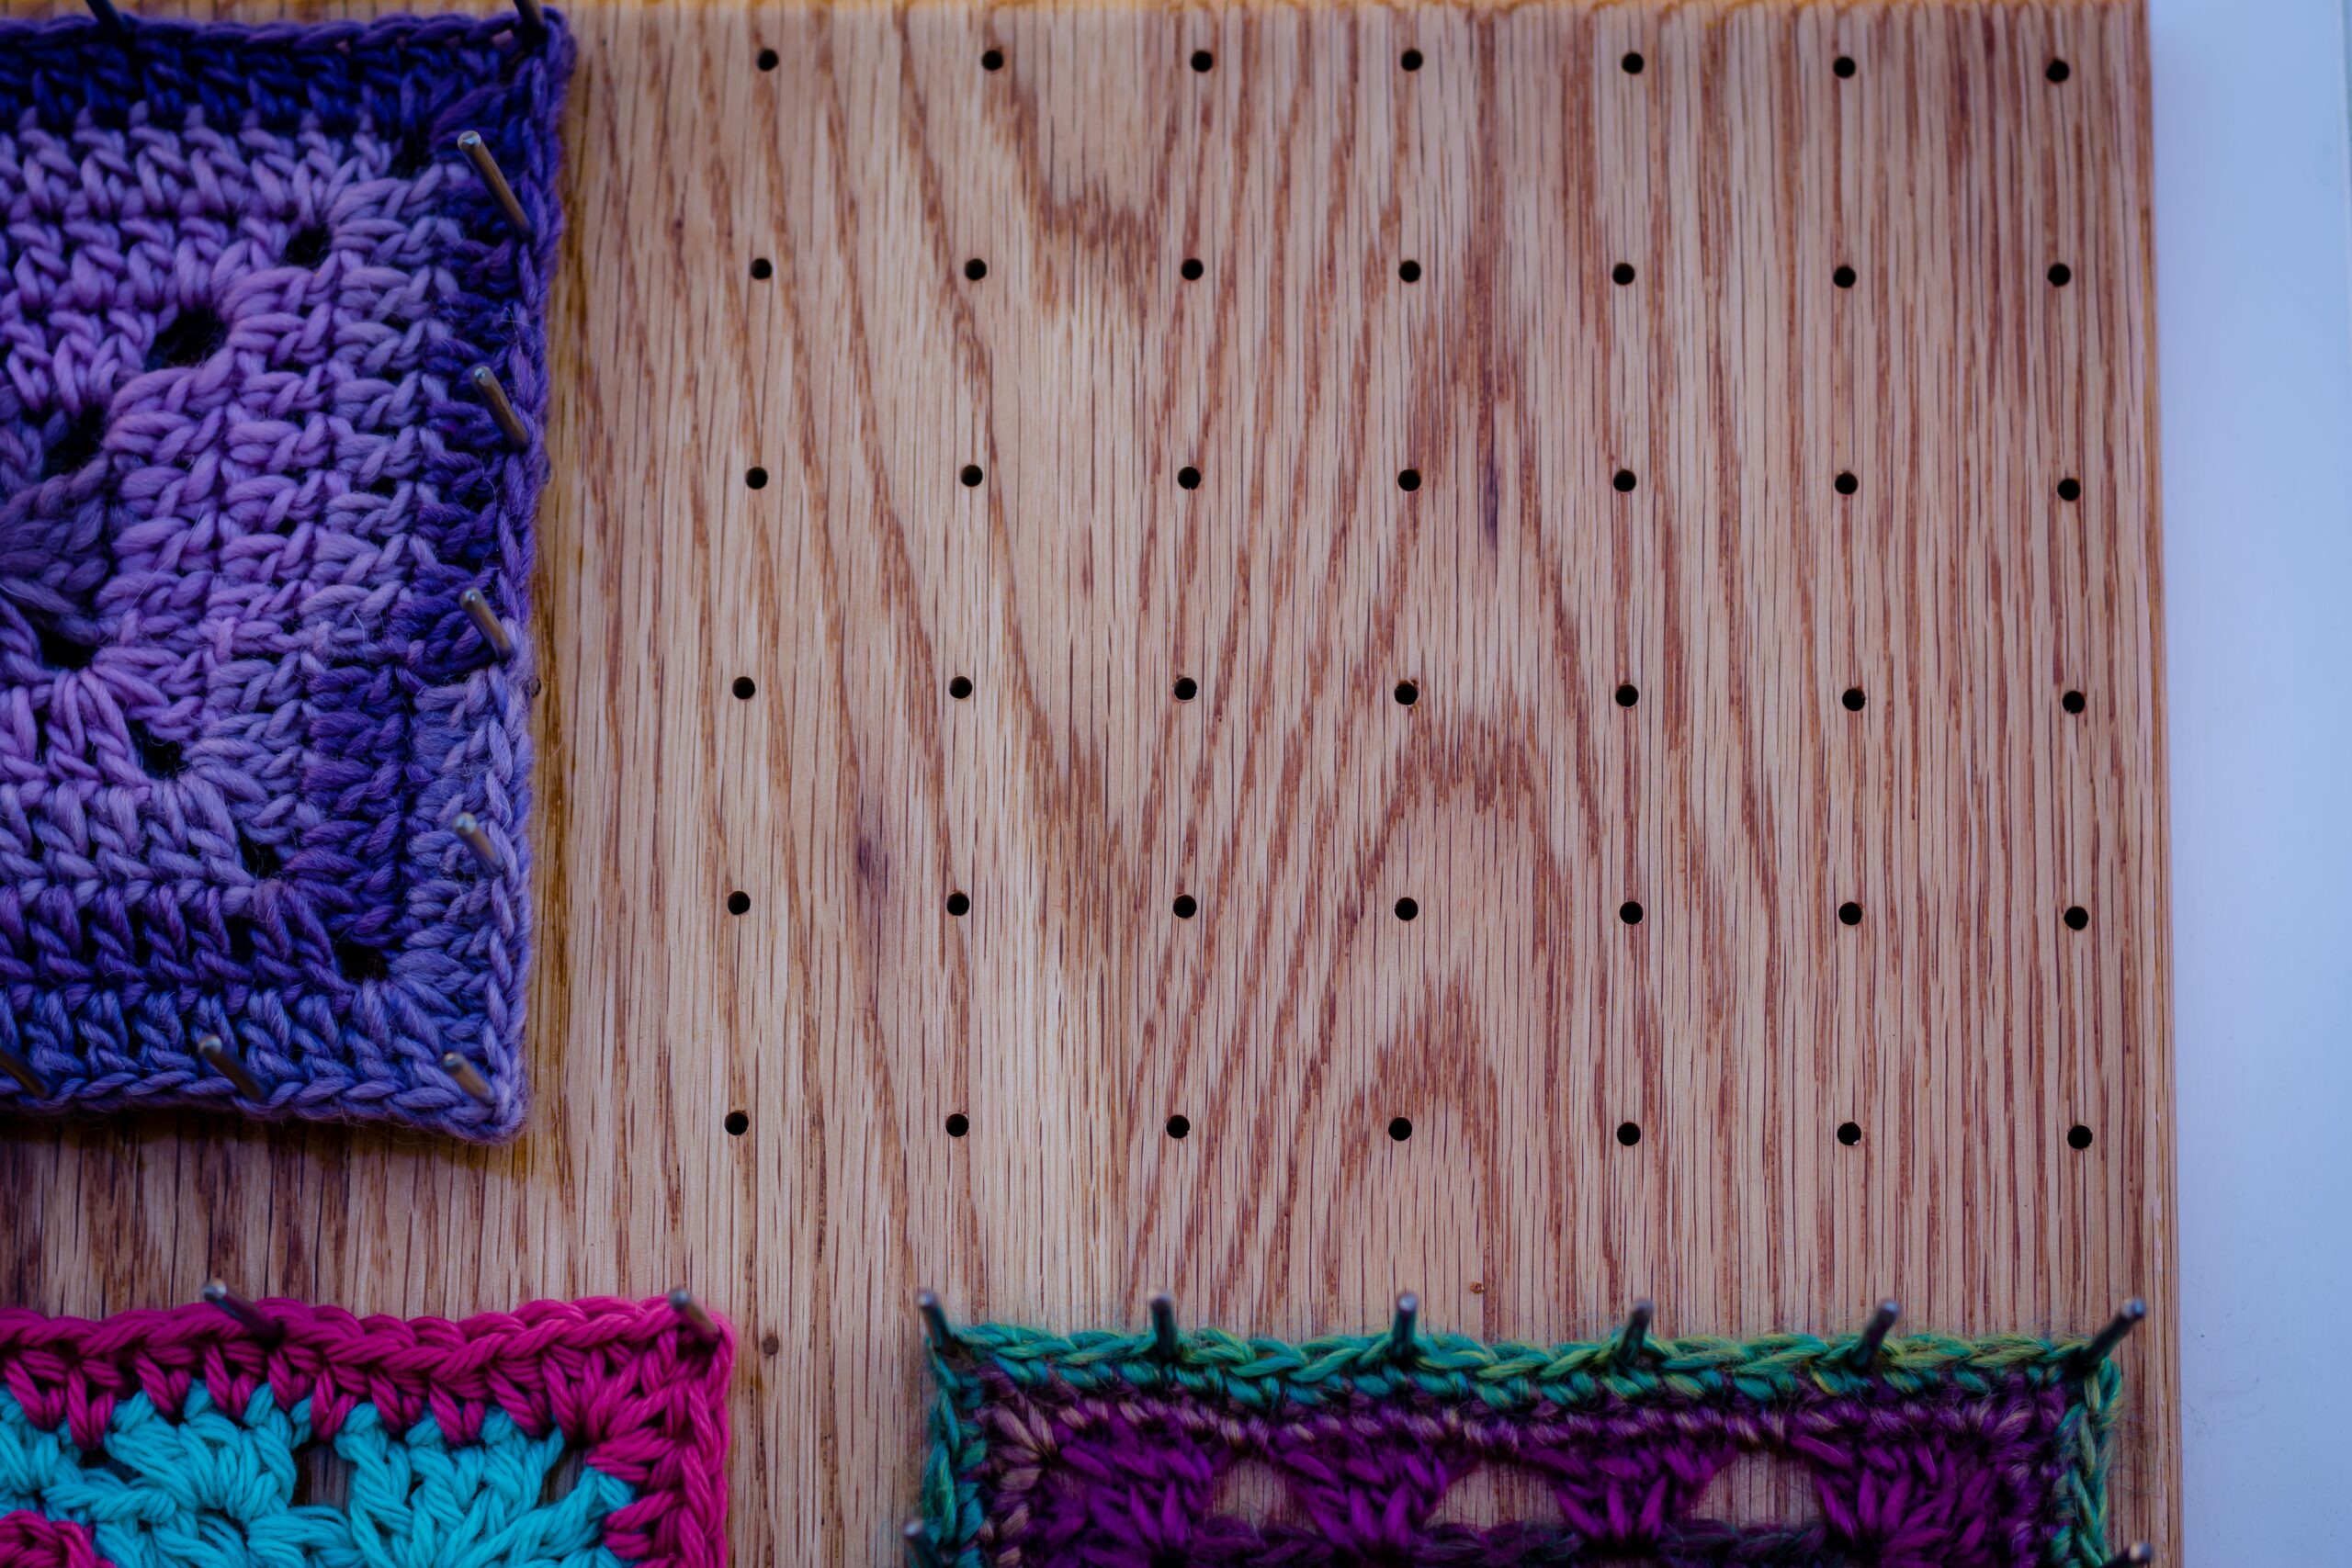 The BlocksAll Afghan / Granny Square Crochet Blocking Board